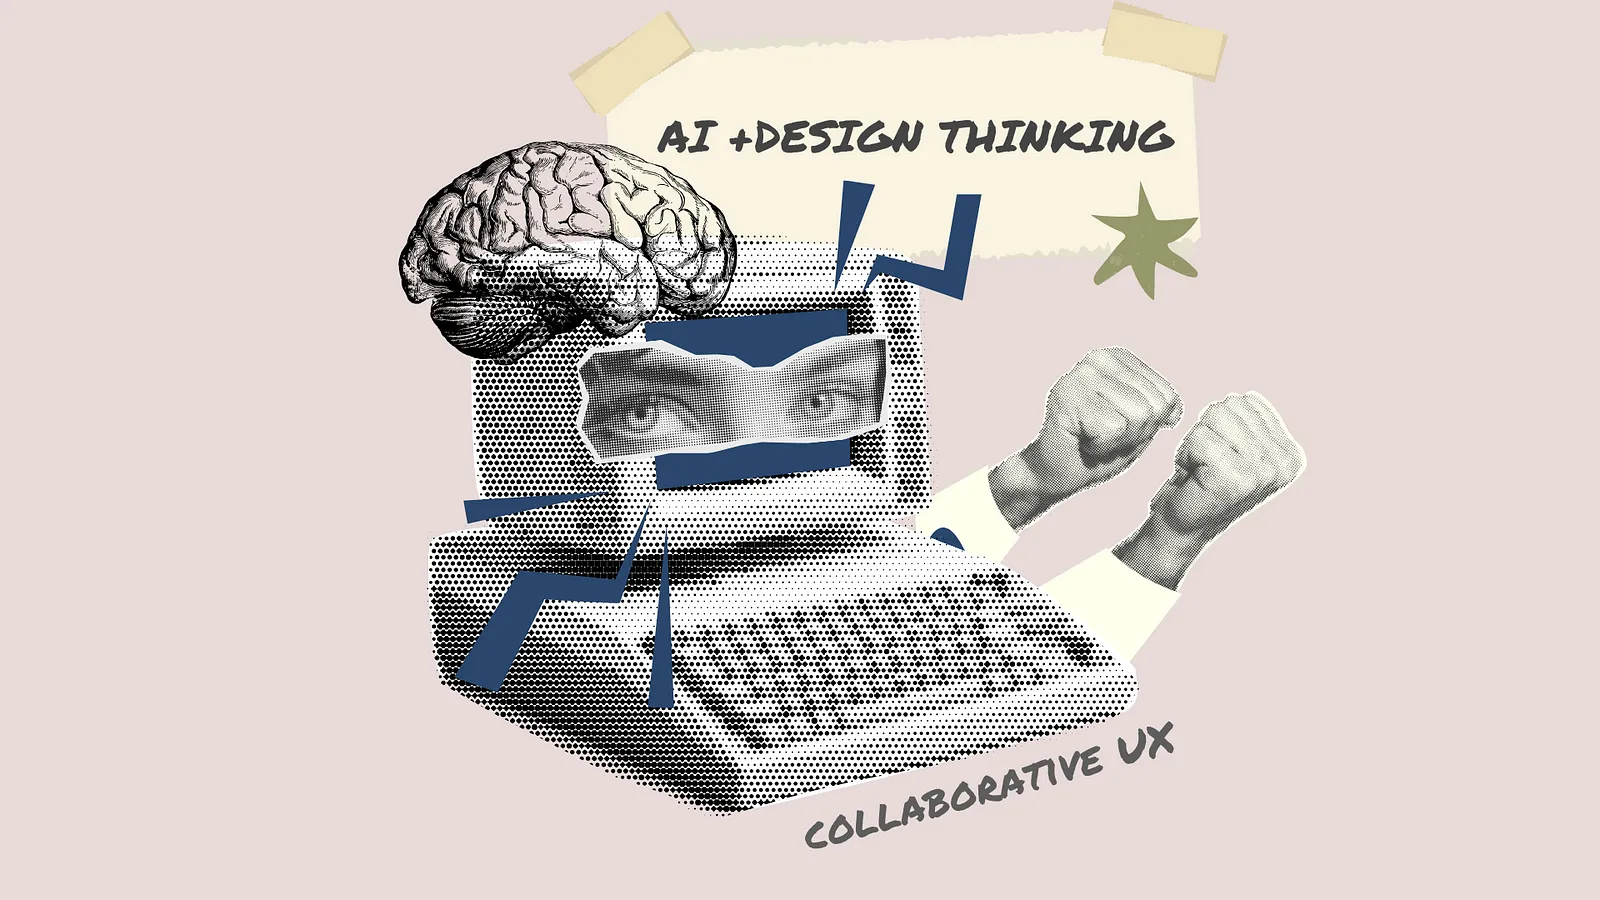 Collaborative UX: Integrating AI into design thinking